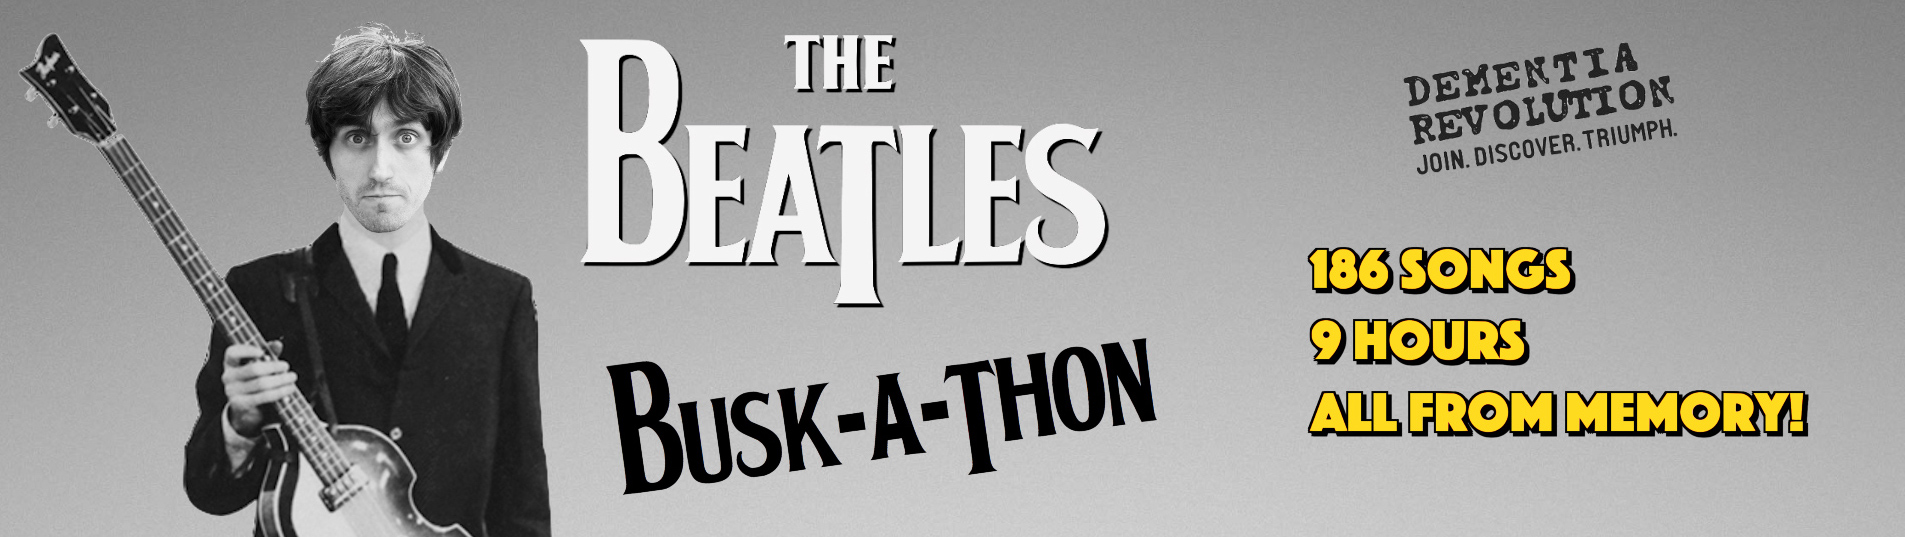 Beatles Busk-a-thon